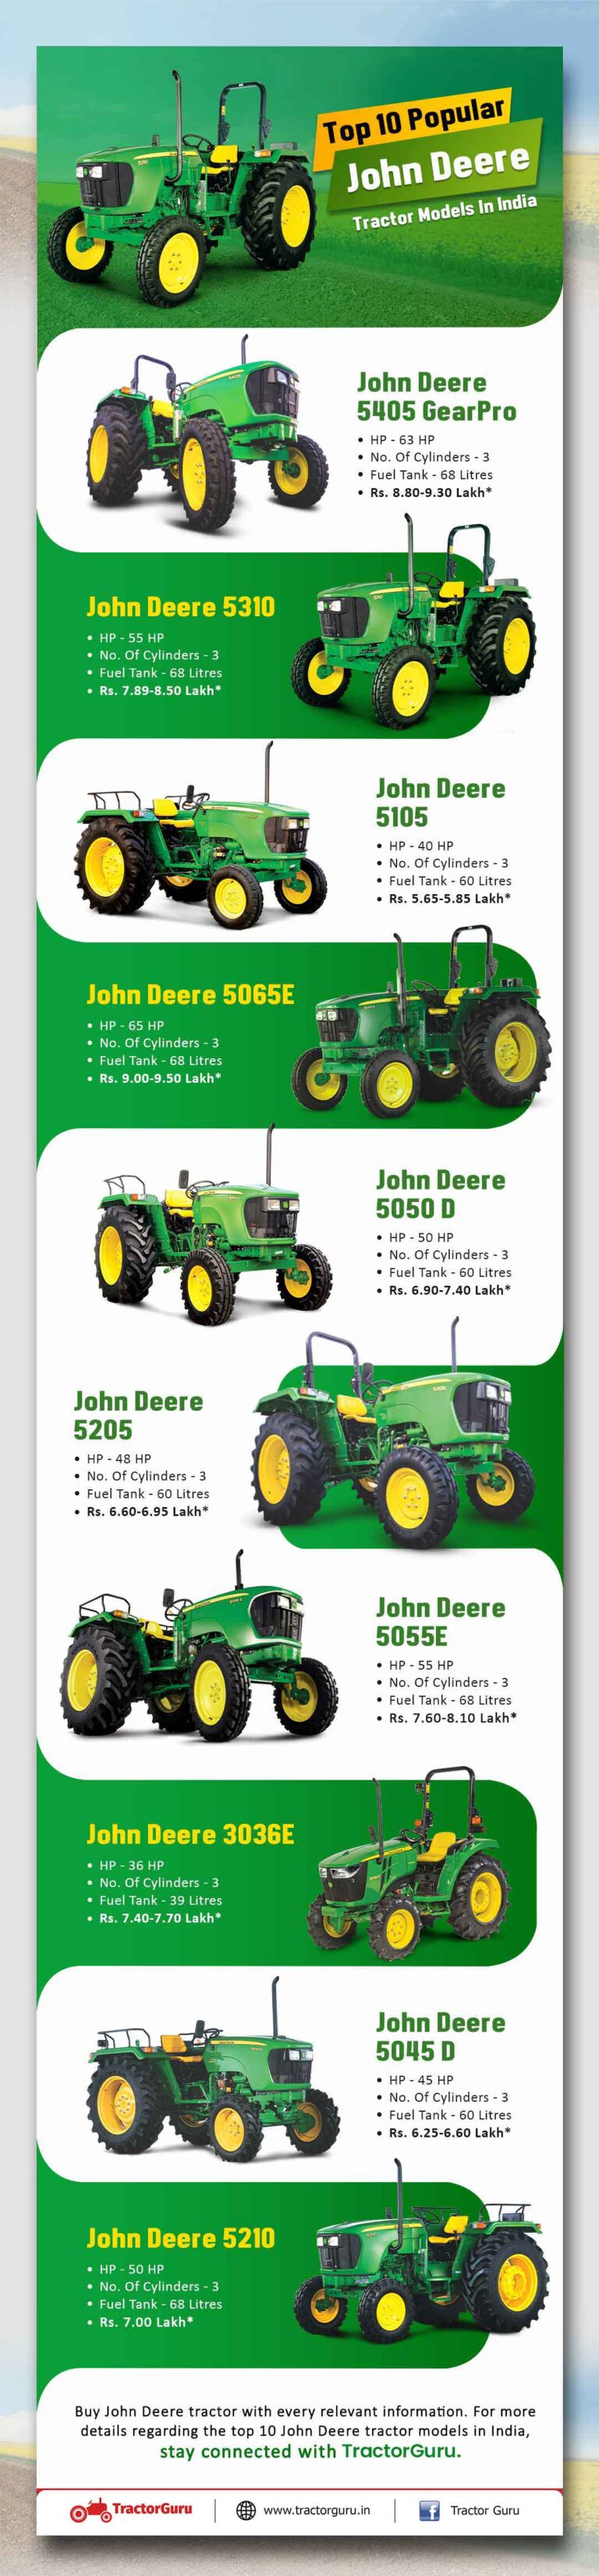 Top 10 John Deere Tractor Models In India - Price & Specifications